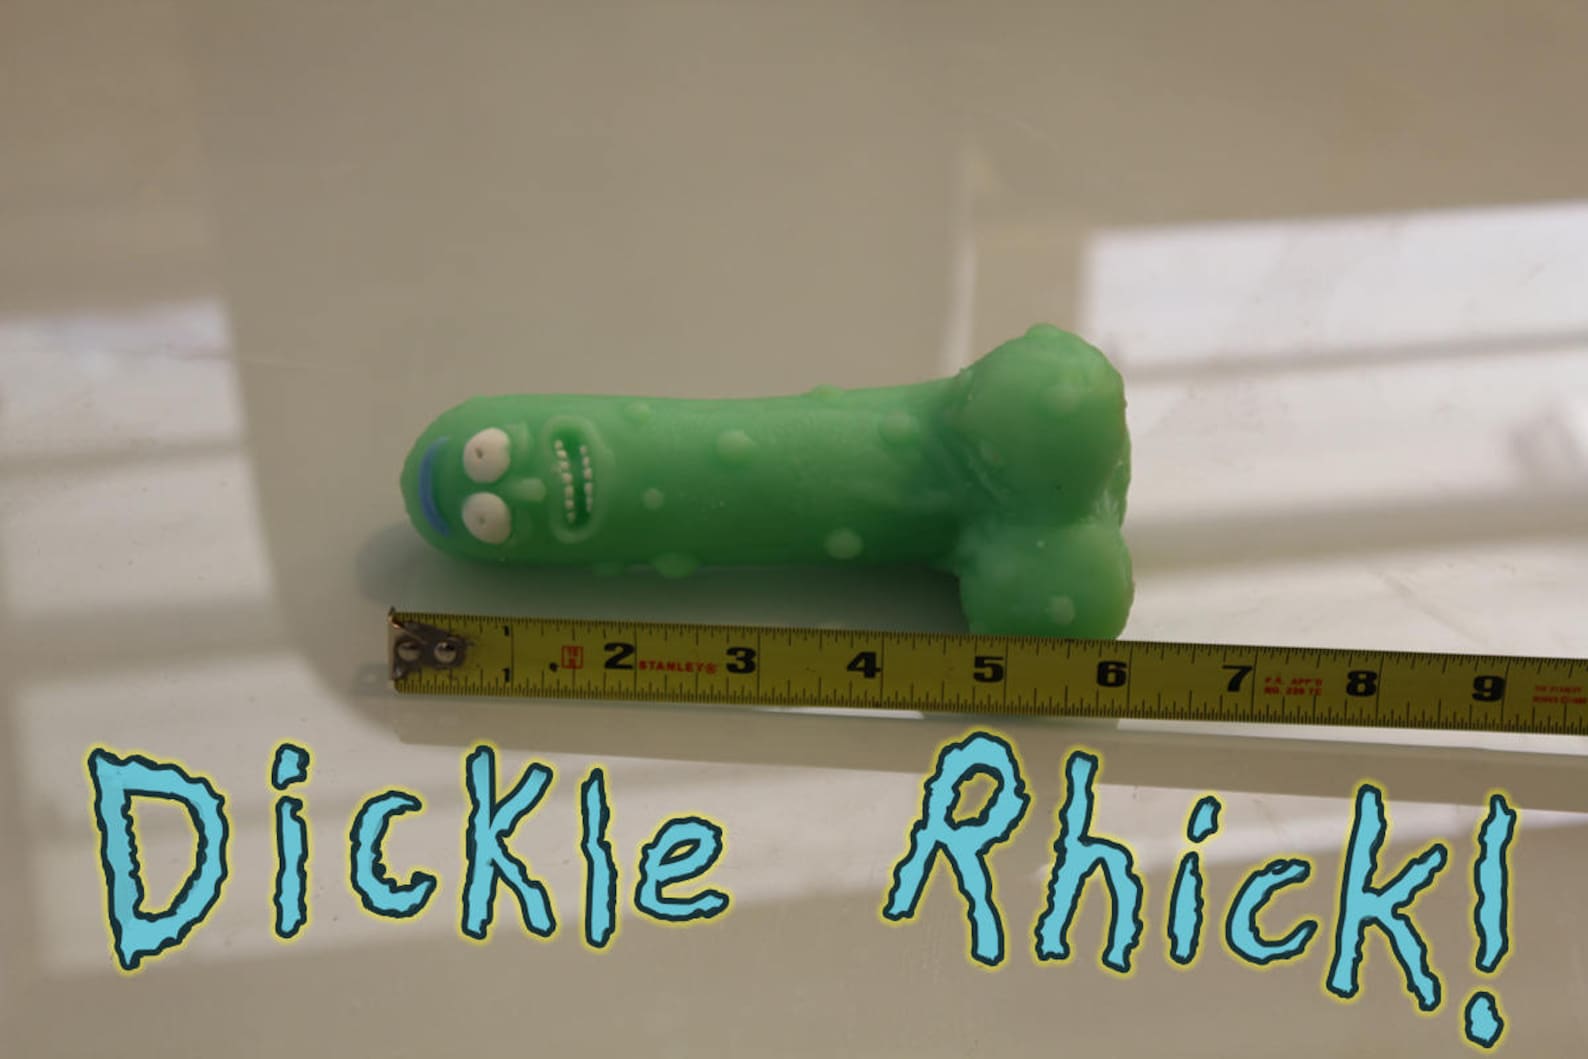 Dickle Rick Pickle Scientist Dildo Etsy